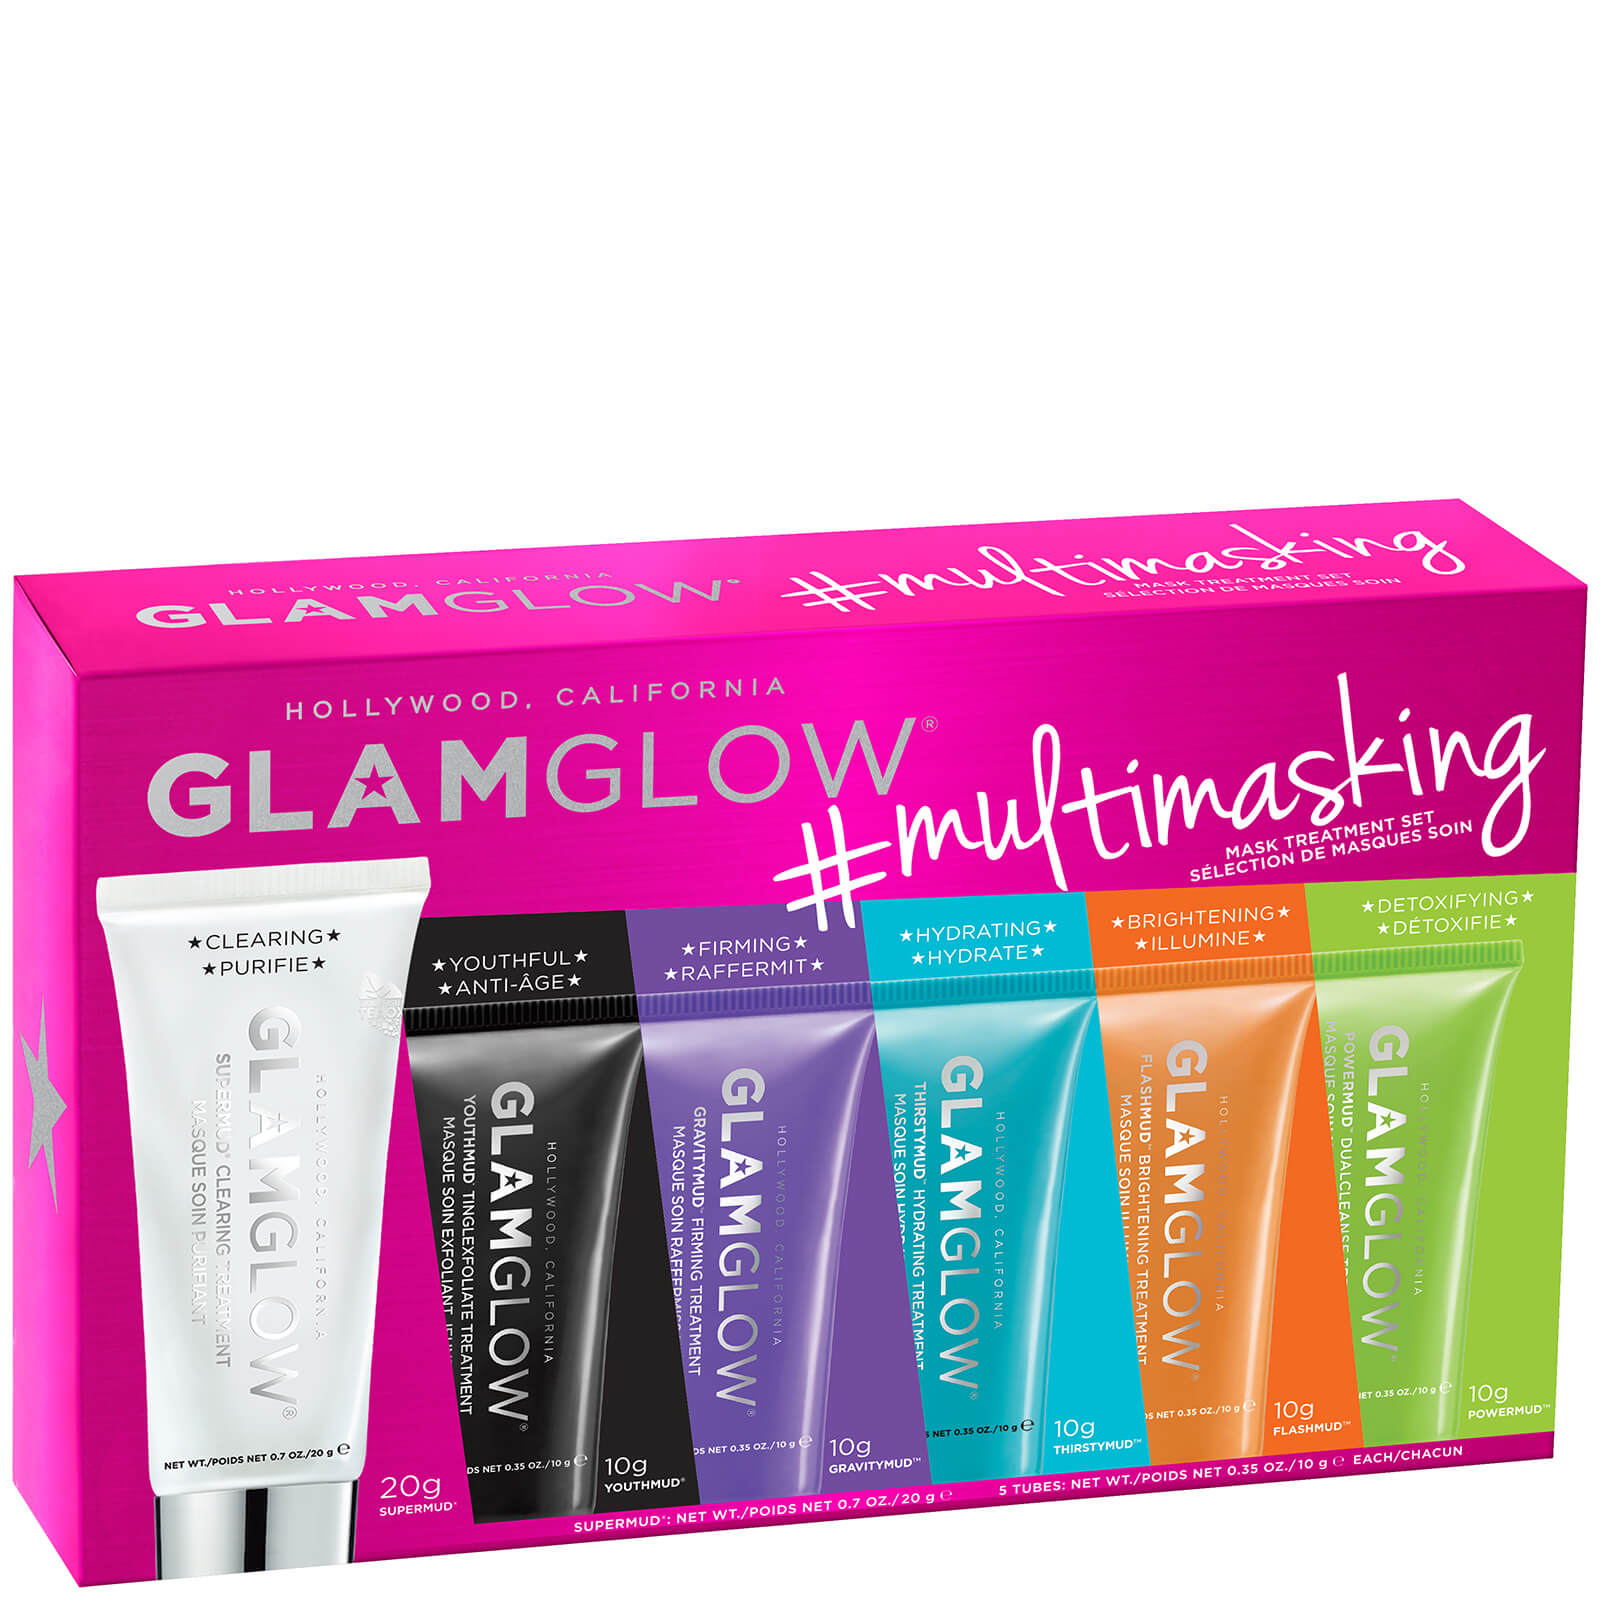 GLAMGLOW #MULTIMASKING Mask Treatment Set